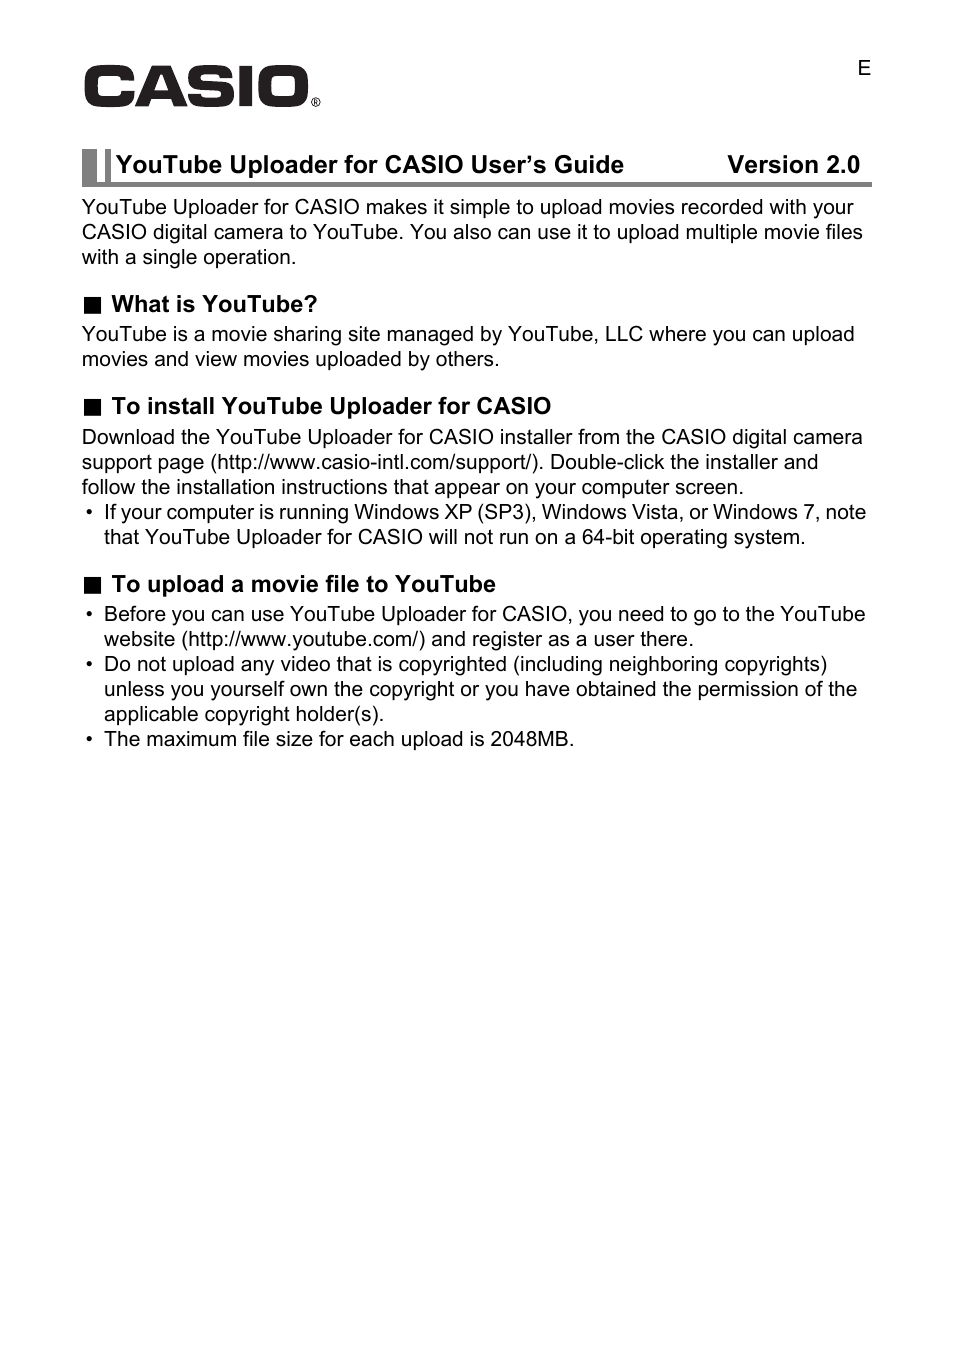 YouTube Uploader for CASIO